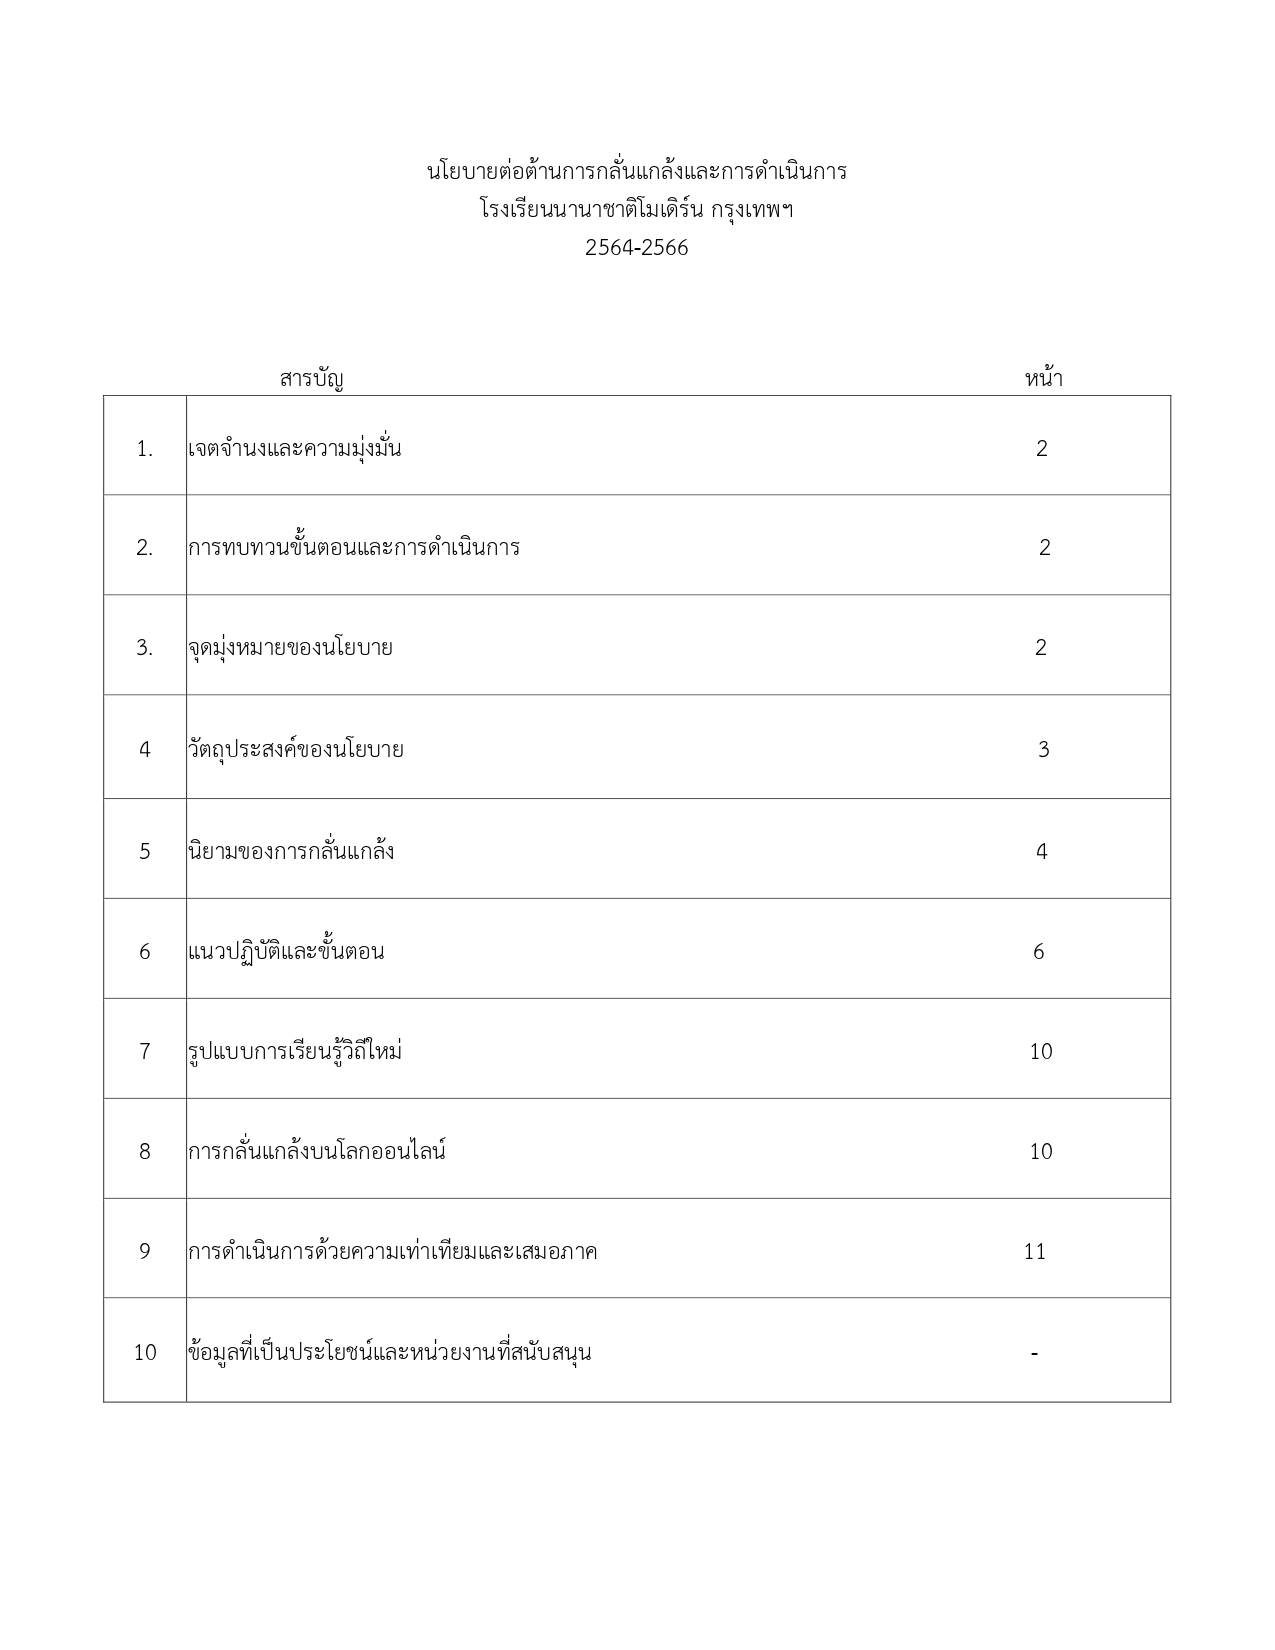 Anti Bullying Policy 2021 2023 Thai Language page 0003